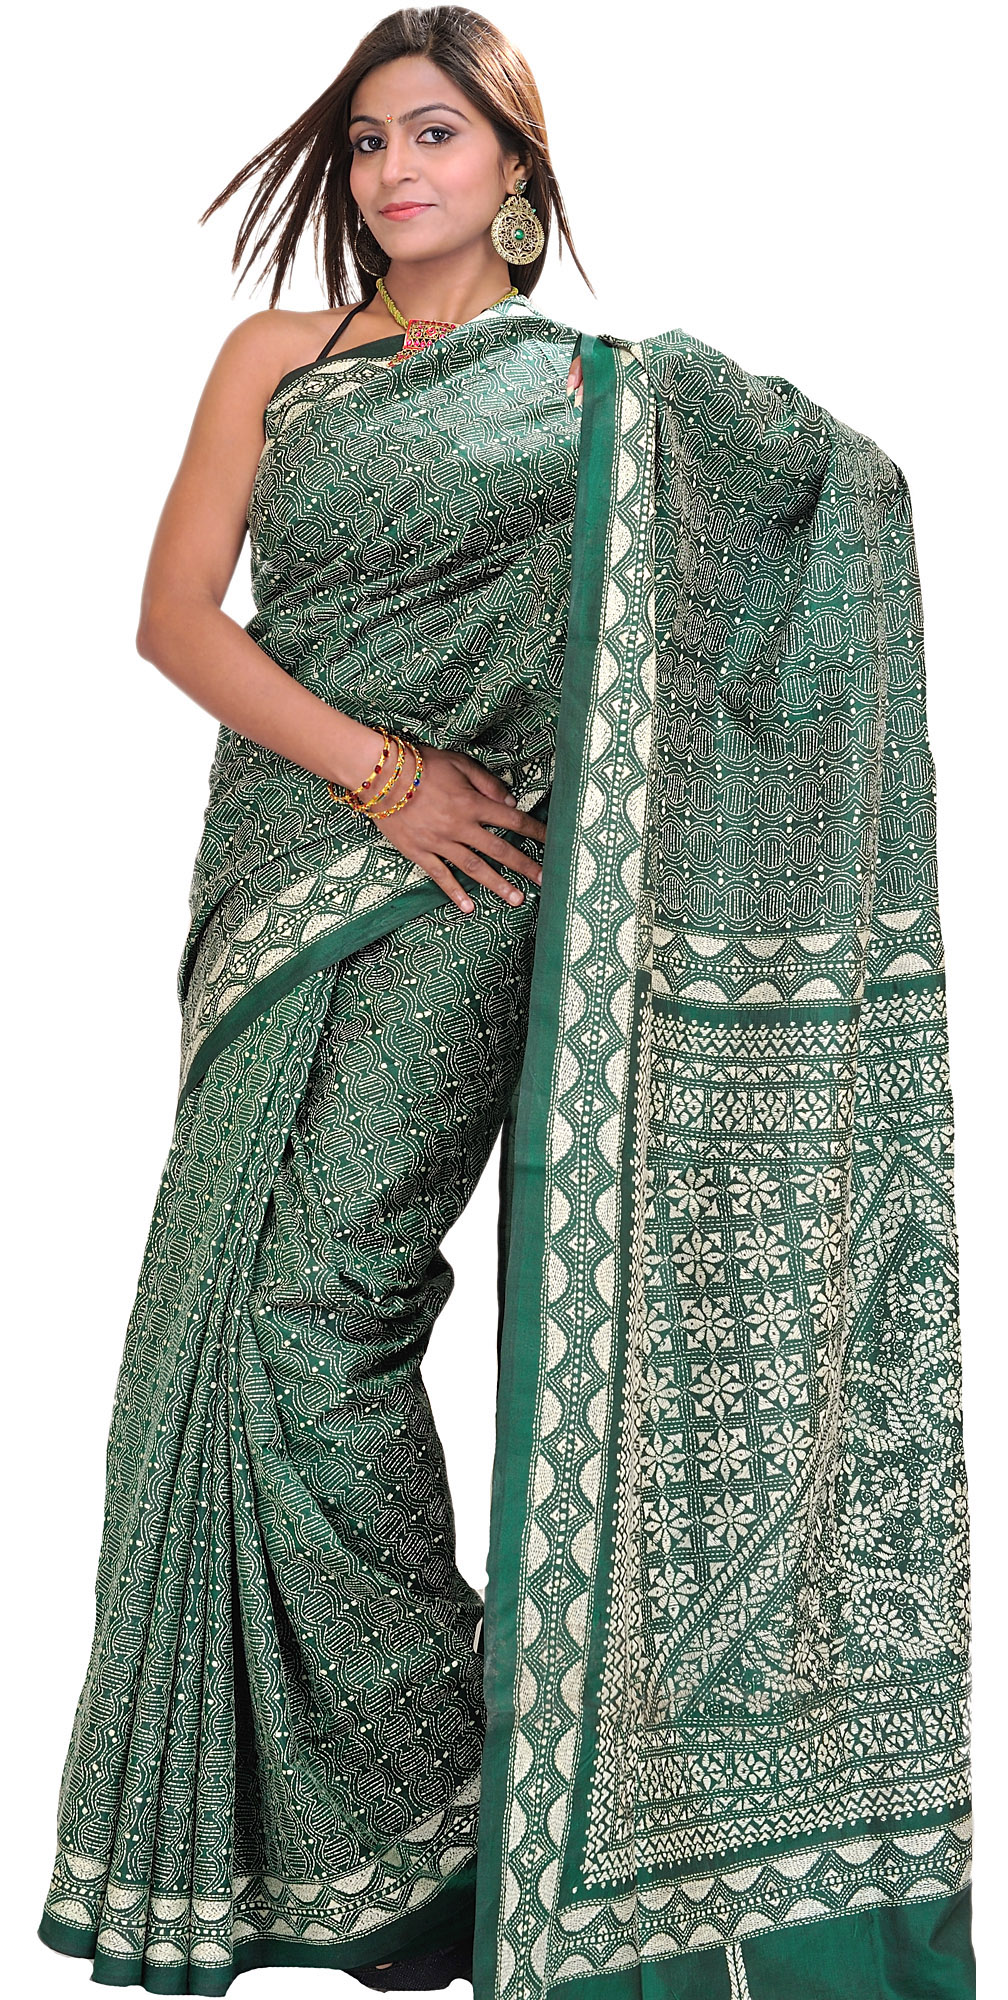 Dark-Green Sari from Kolkata with Kantha Embroidery by Hand | Exotic ...